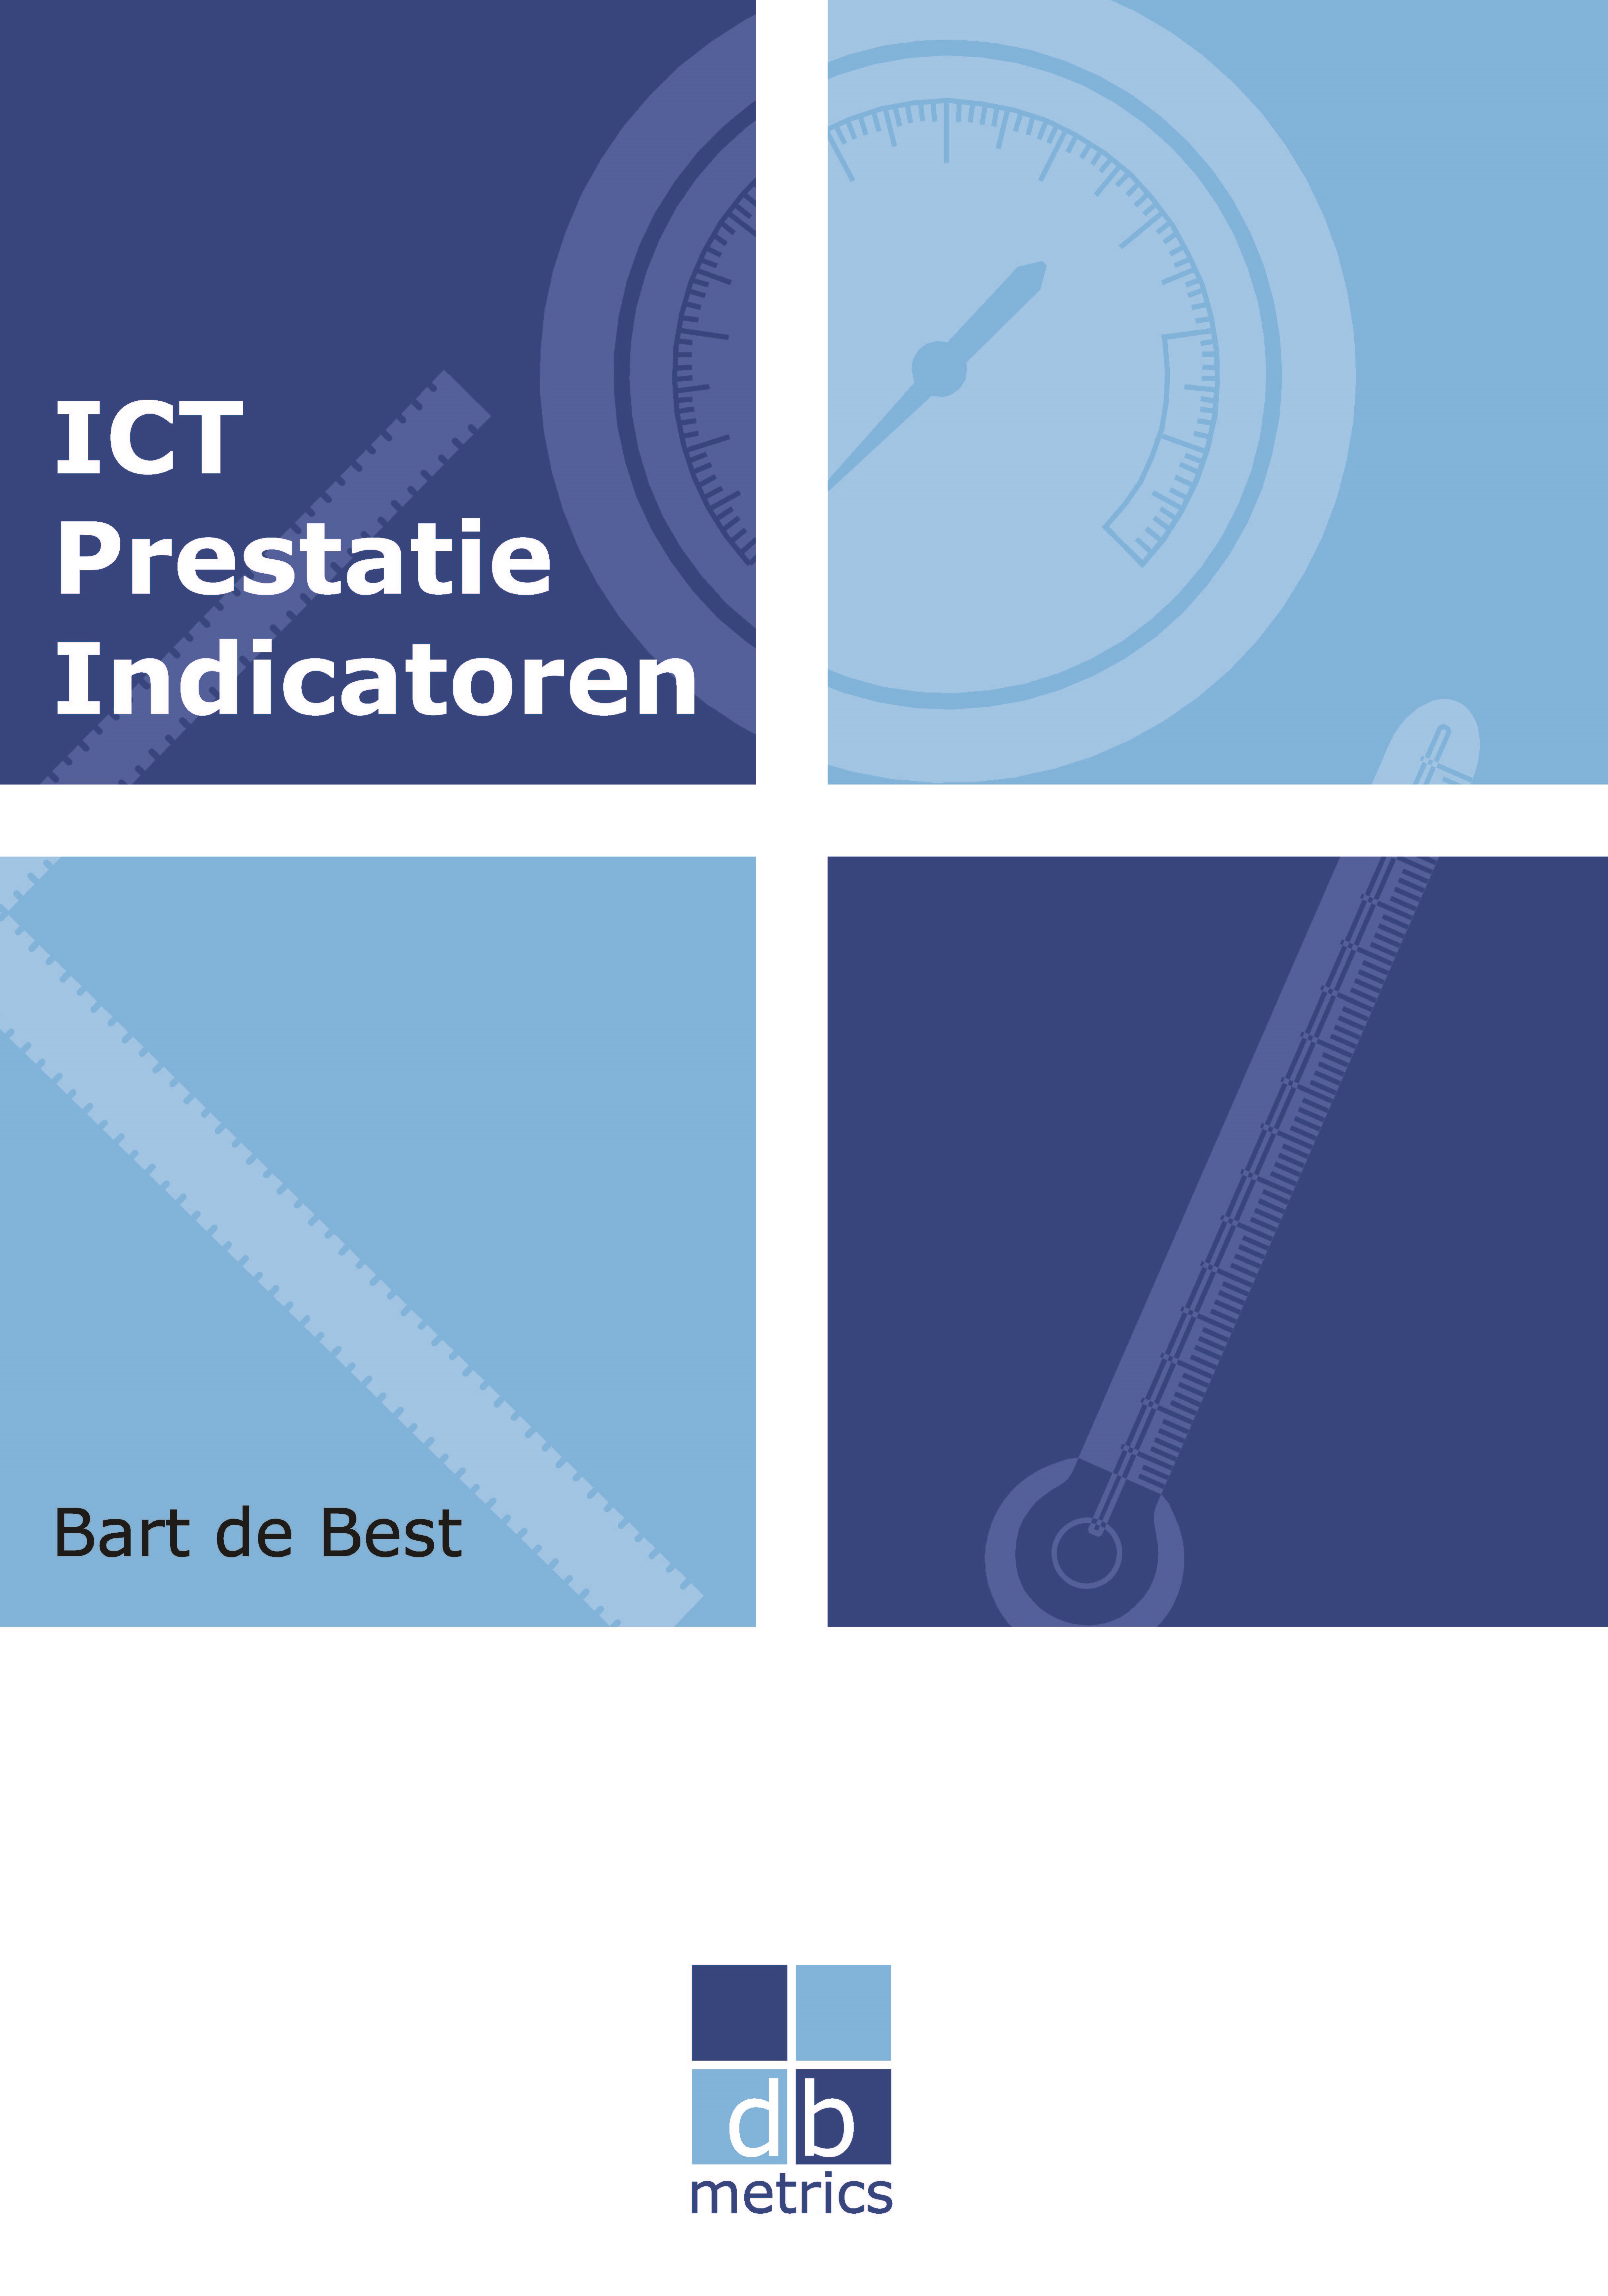 ICT Prestatie Indicatoren